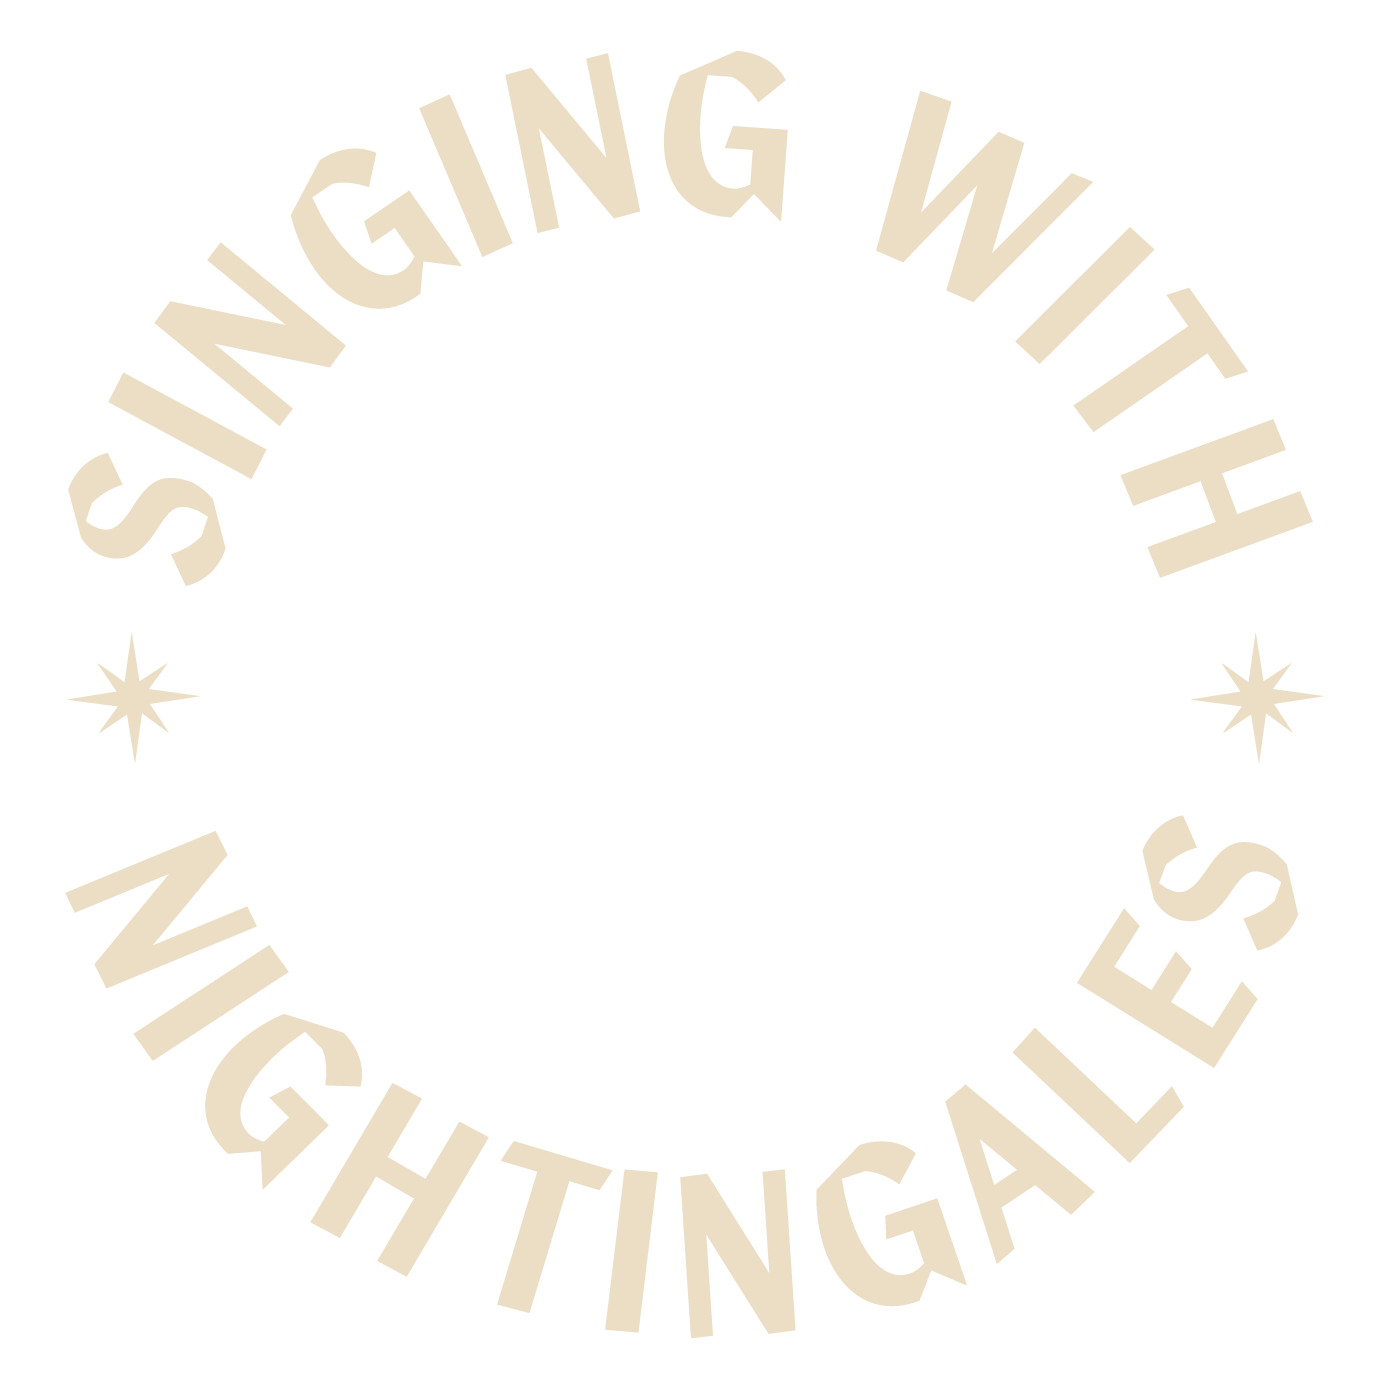 Singing with Nightingales